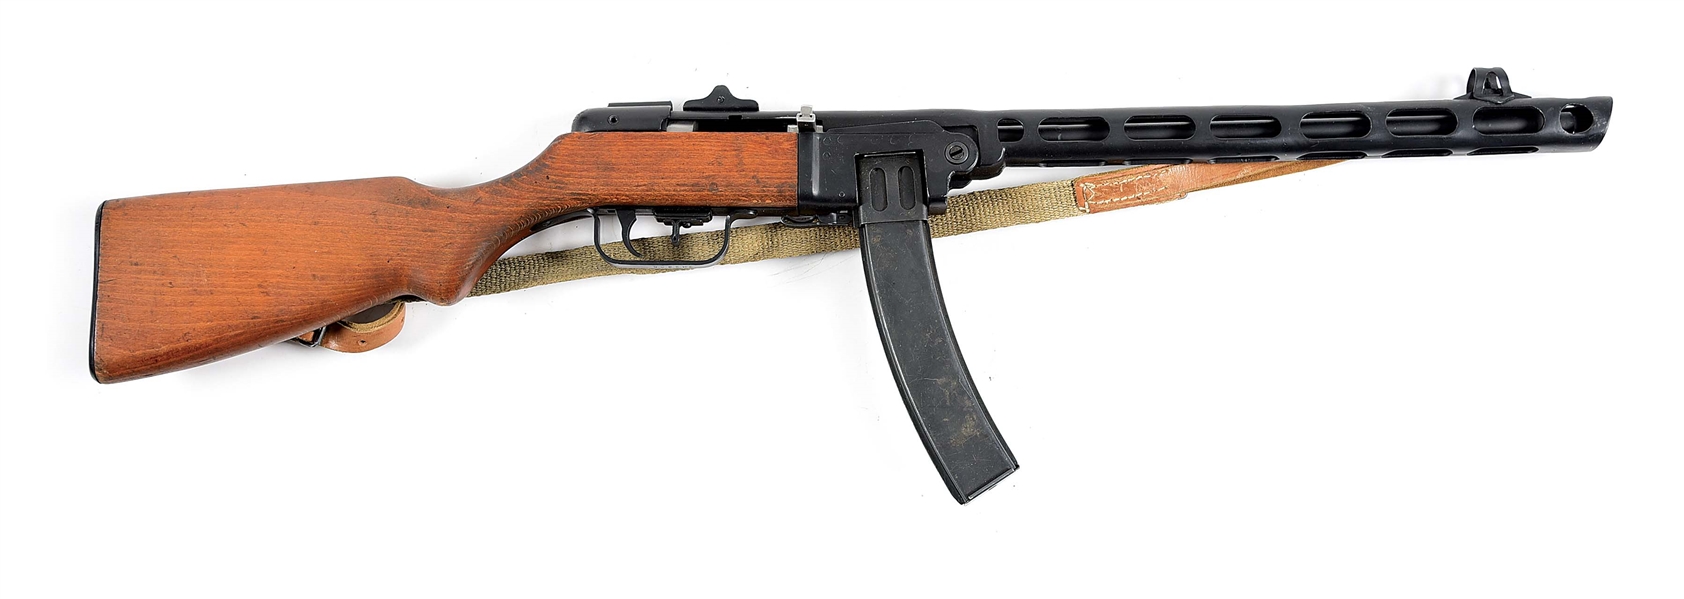 (C) MK GUN MODS PPSH-41 SEMI-AUTOMATIC RIFLE WITH ACCESSORIES.